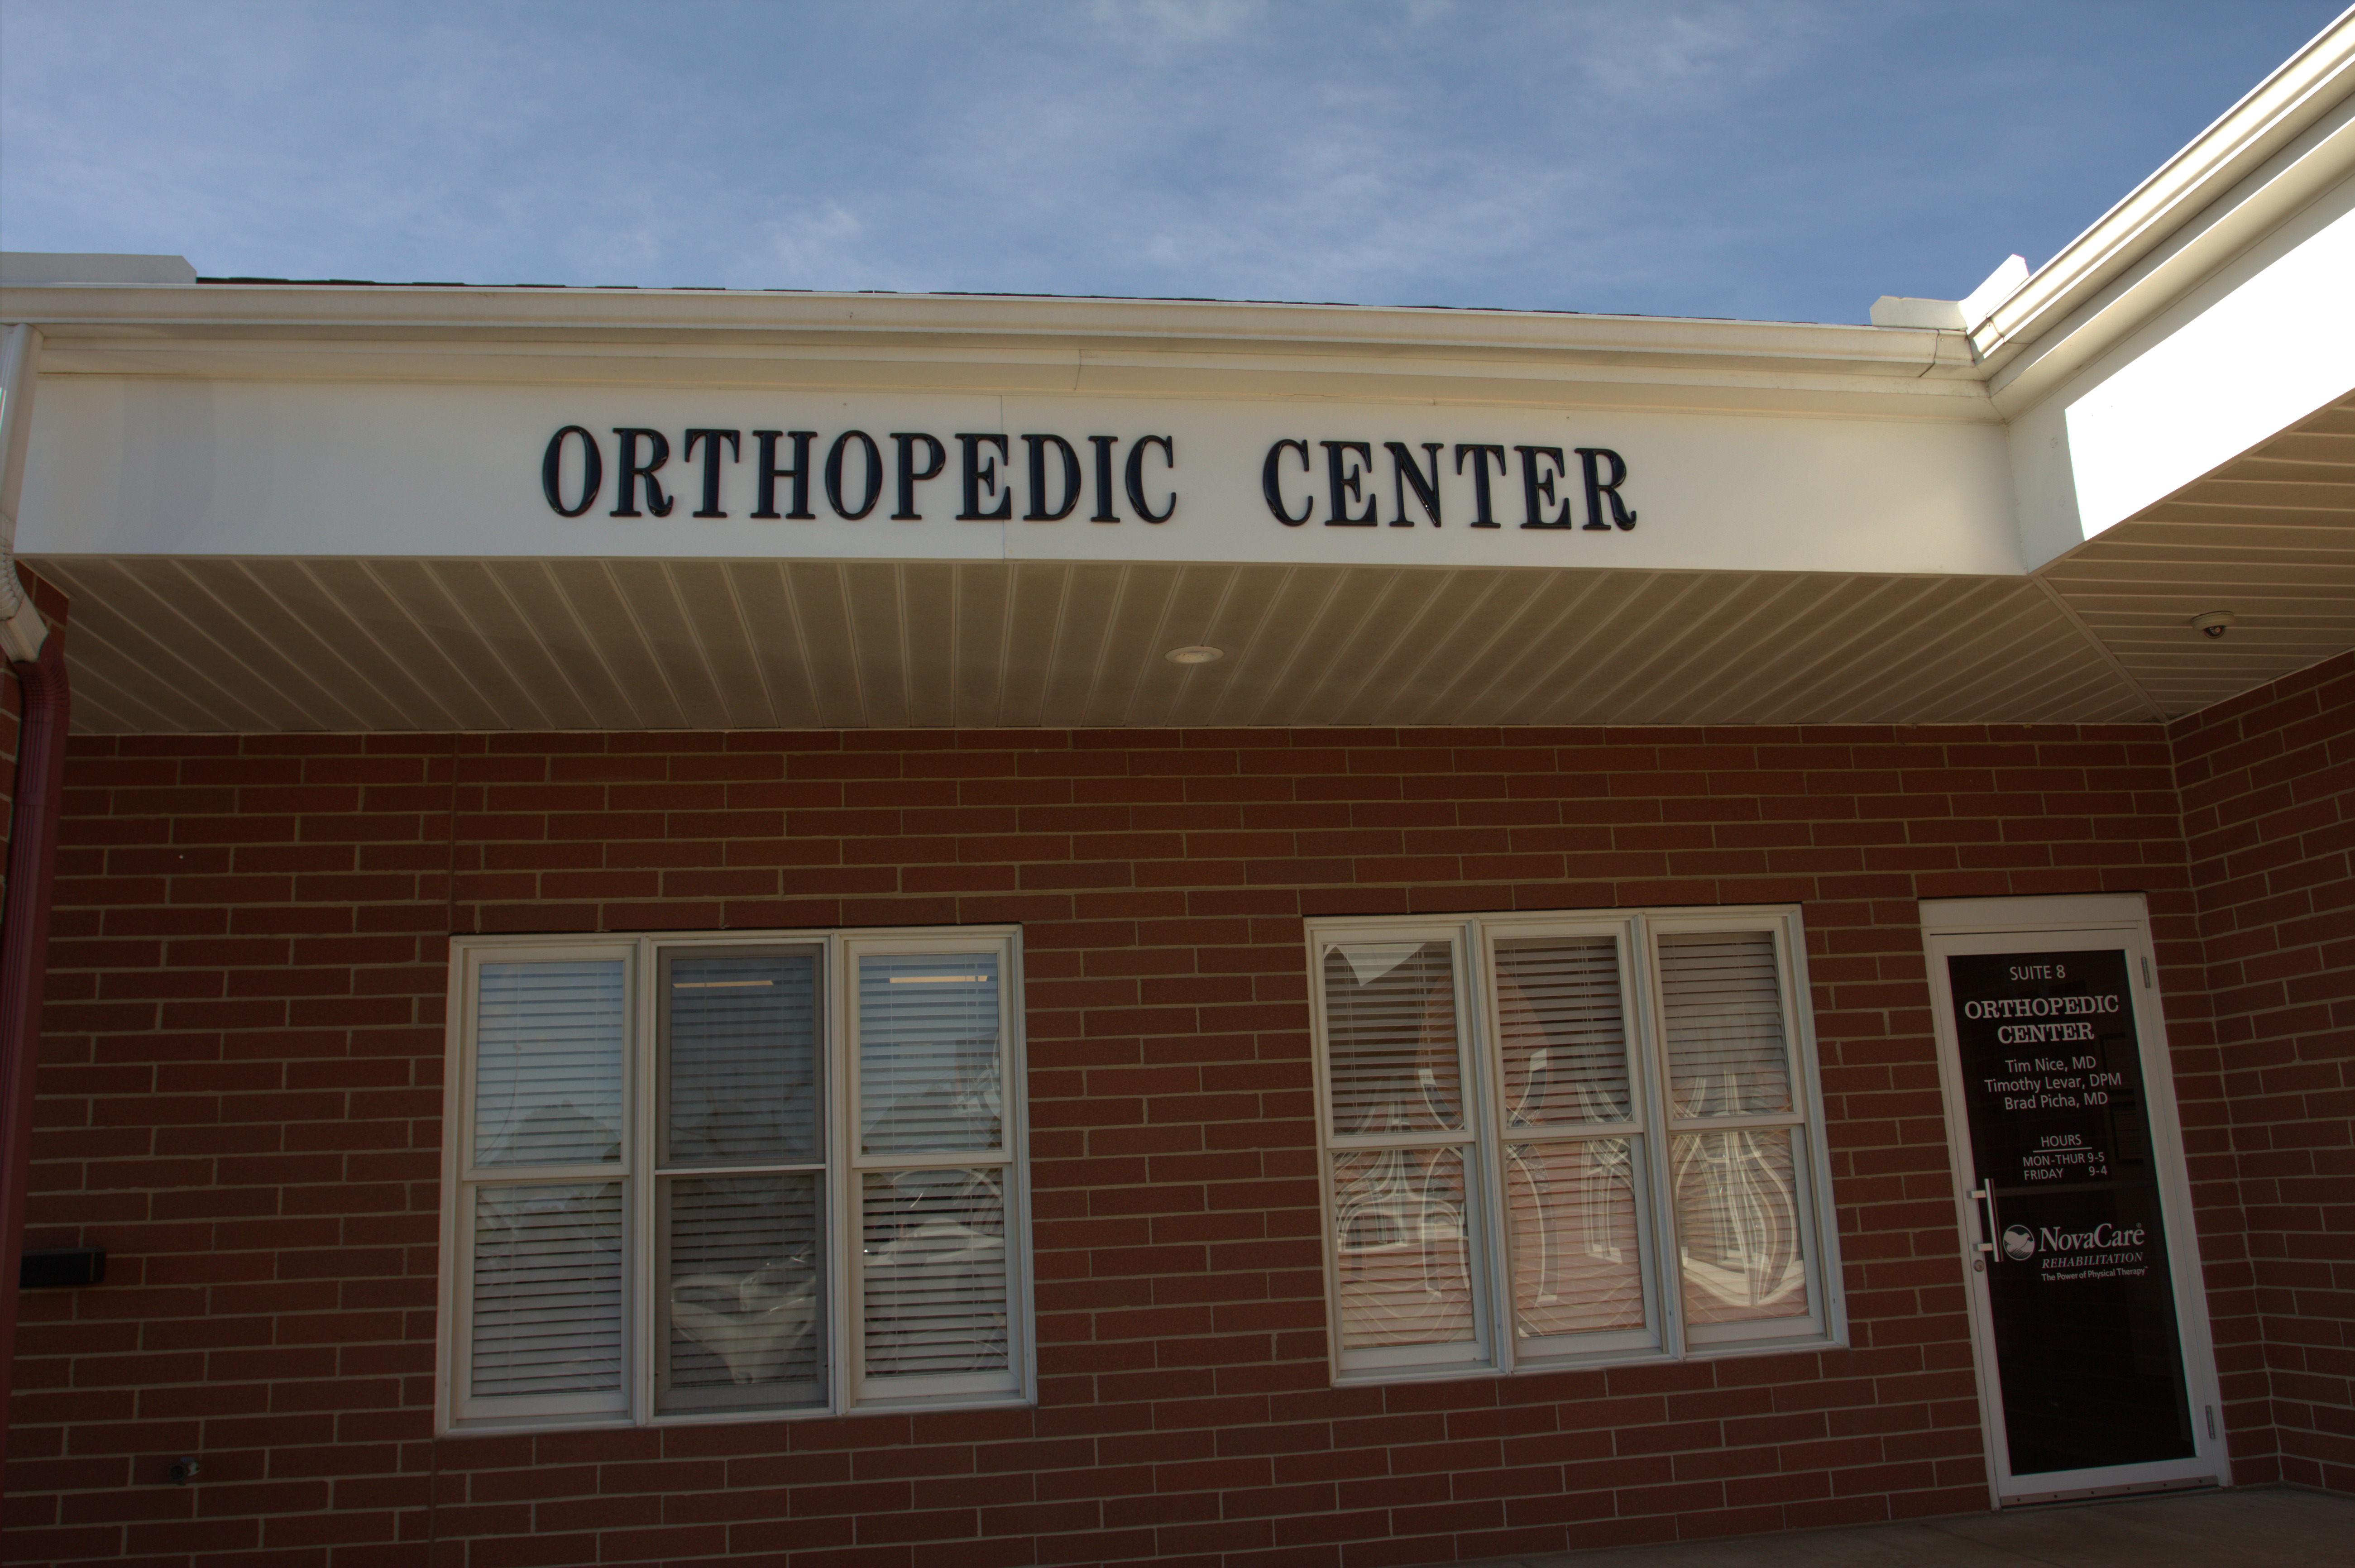 Exterior of Orthopedic Center